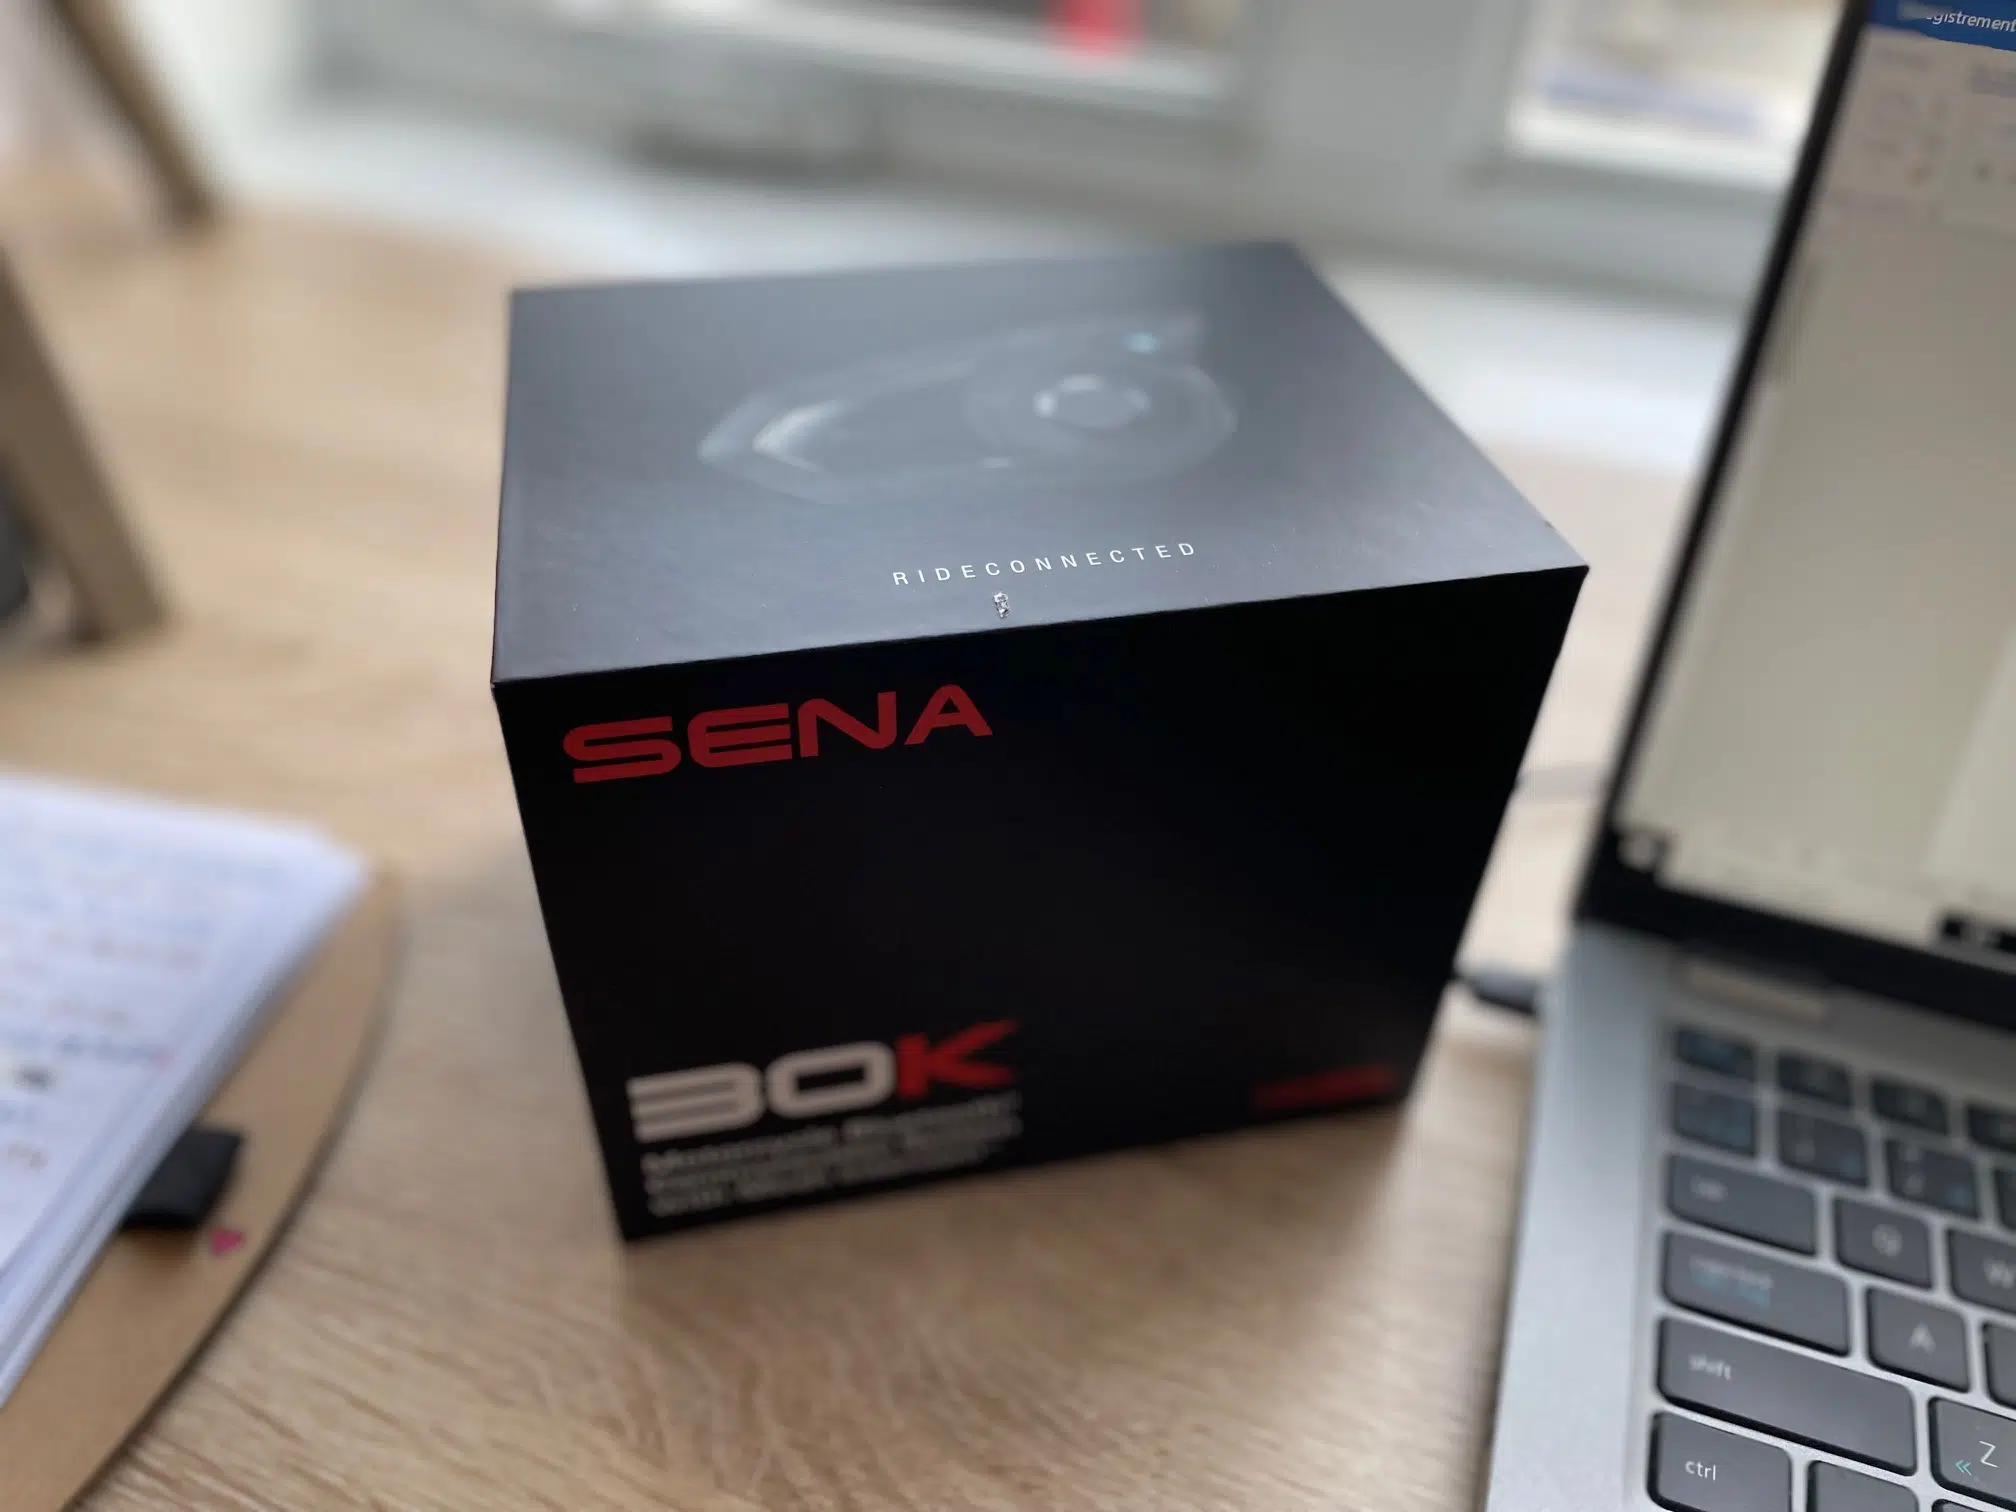 The Sena comes in a small and compact box